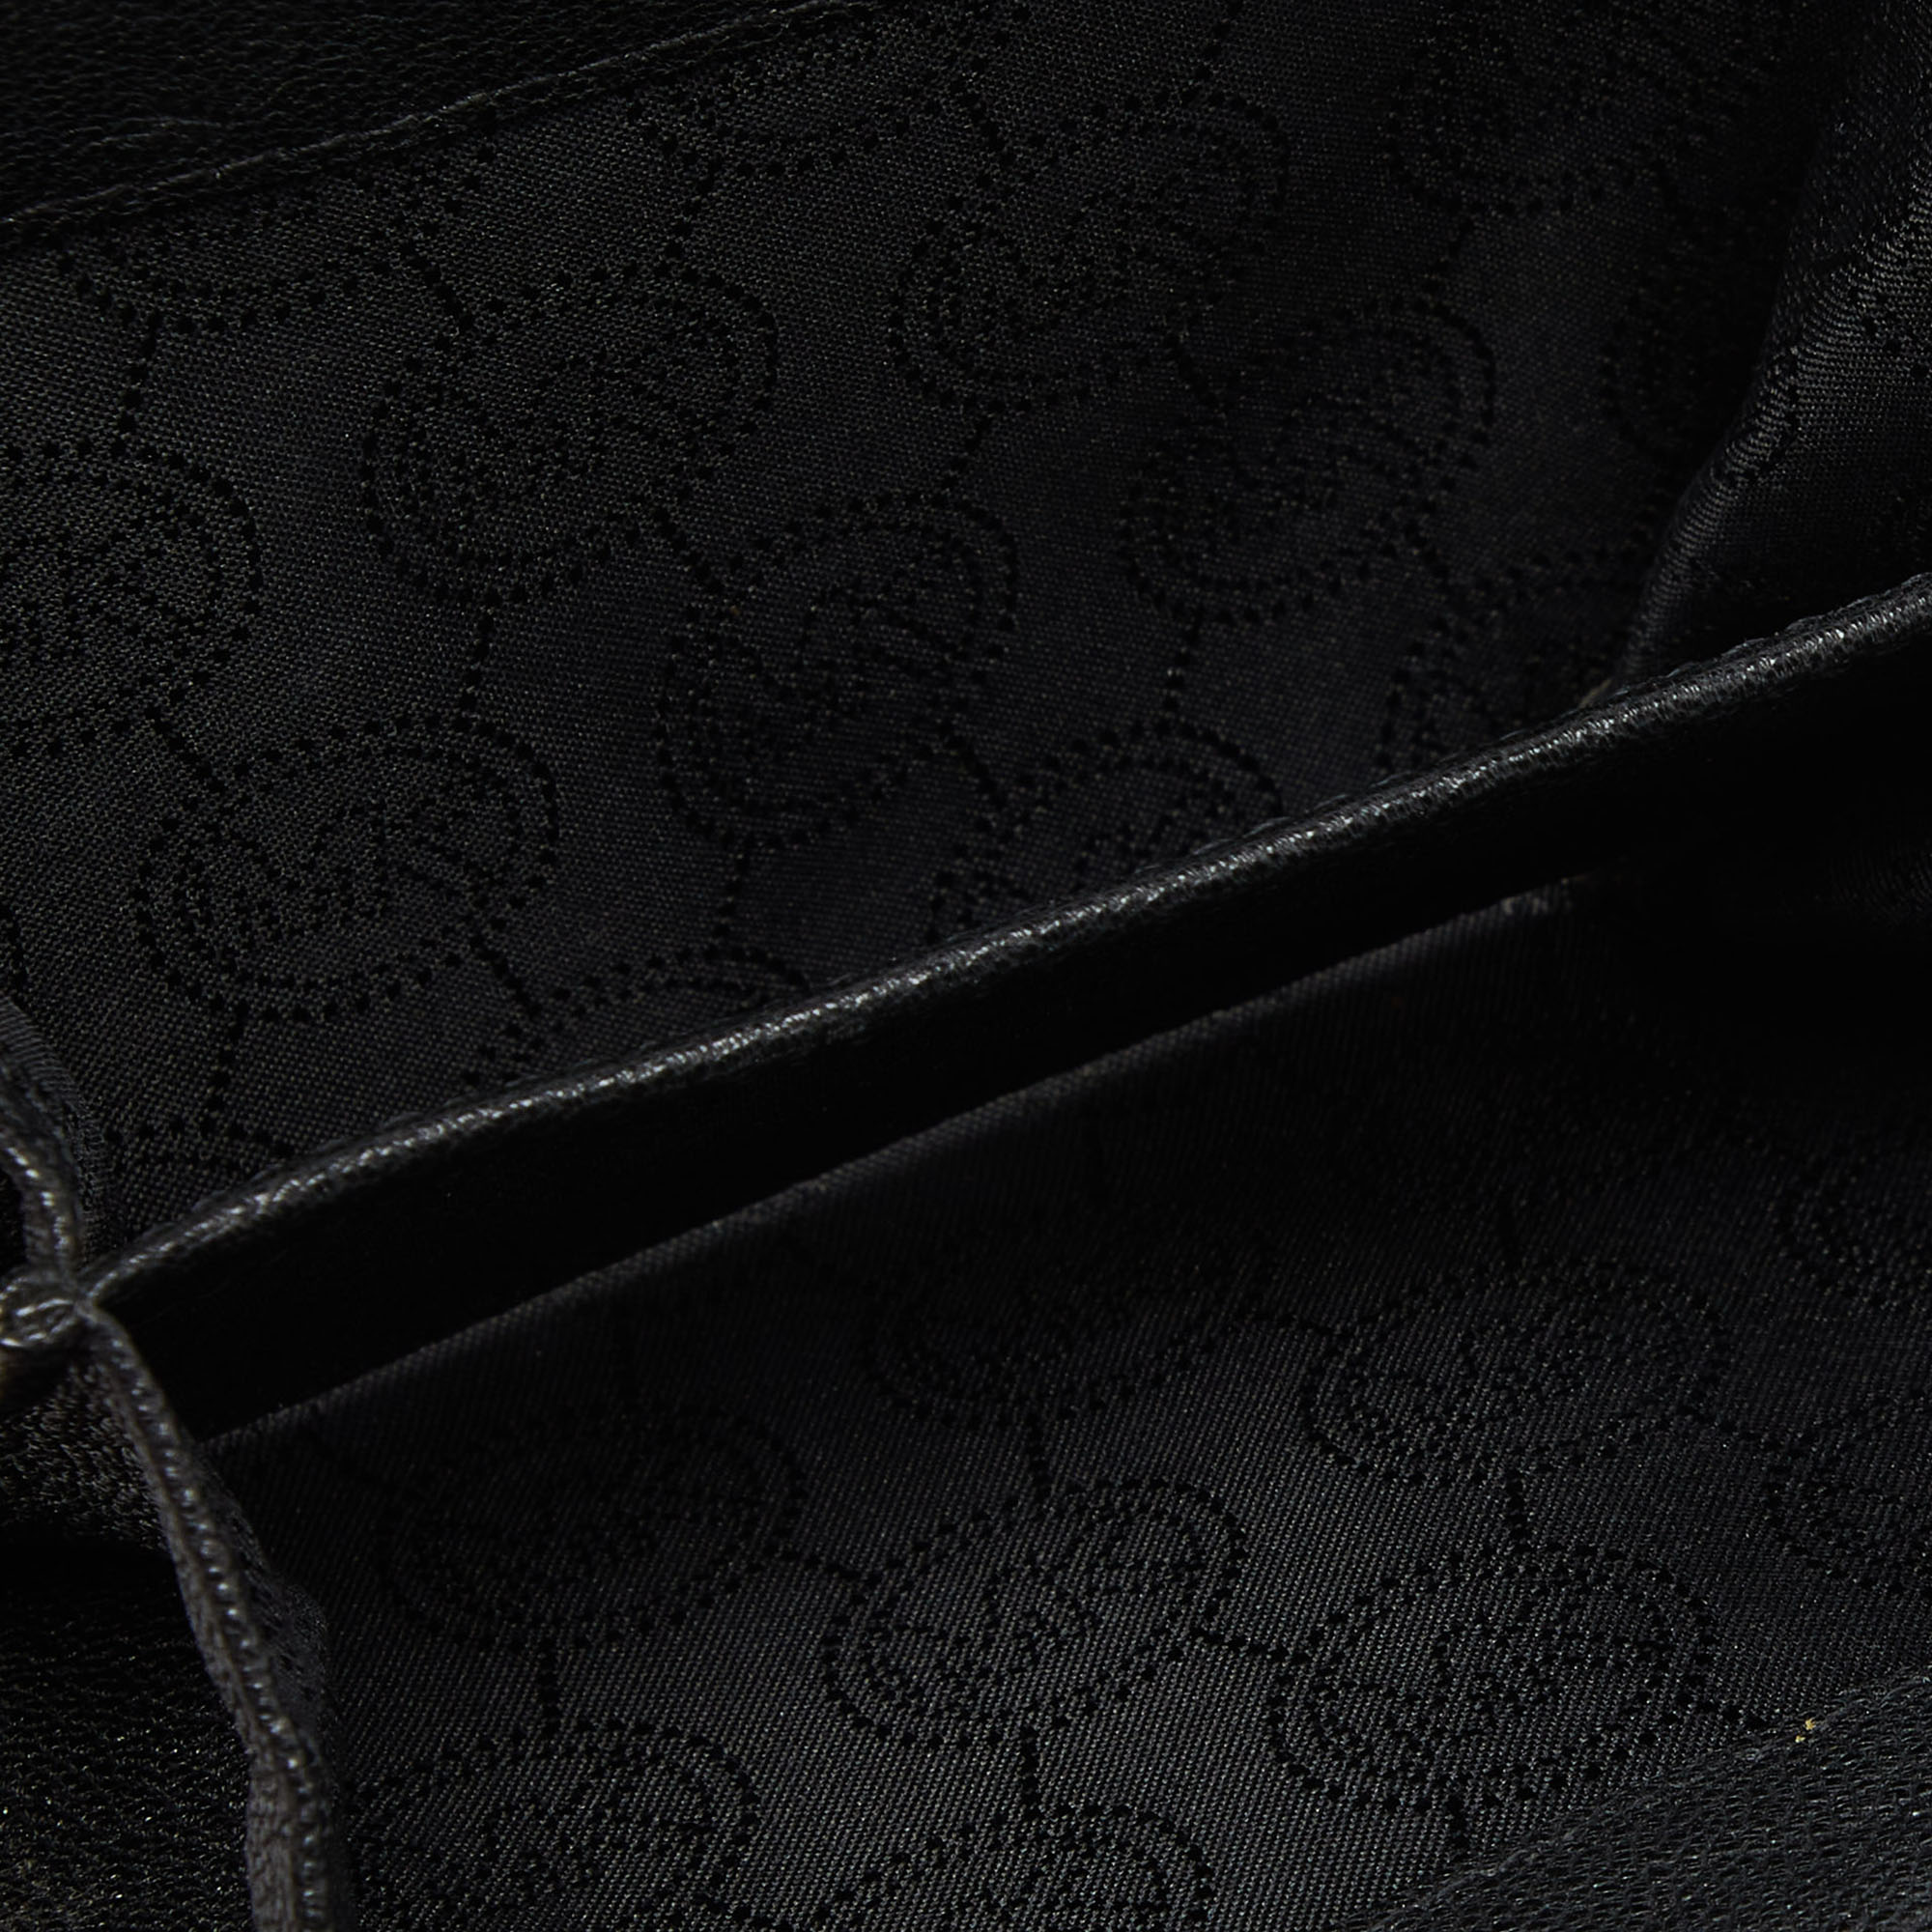 Micheal Kors Black Leather Zip Around Wallet